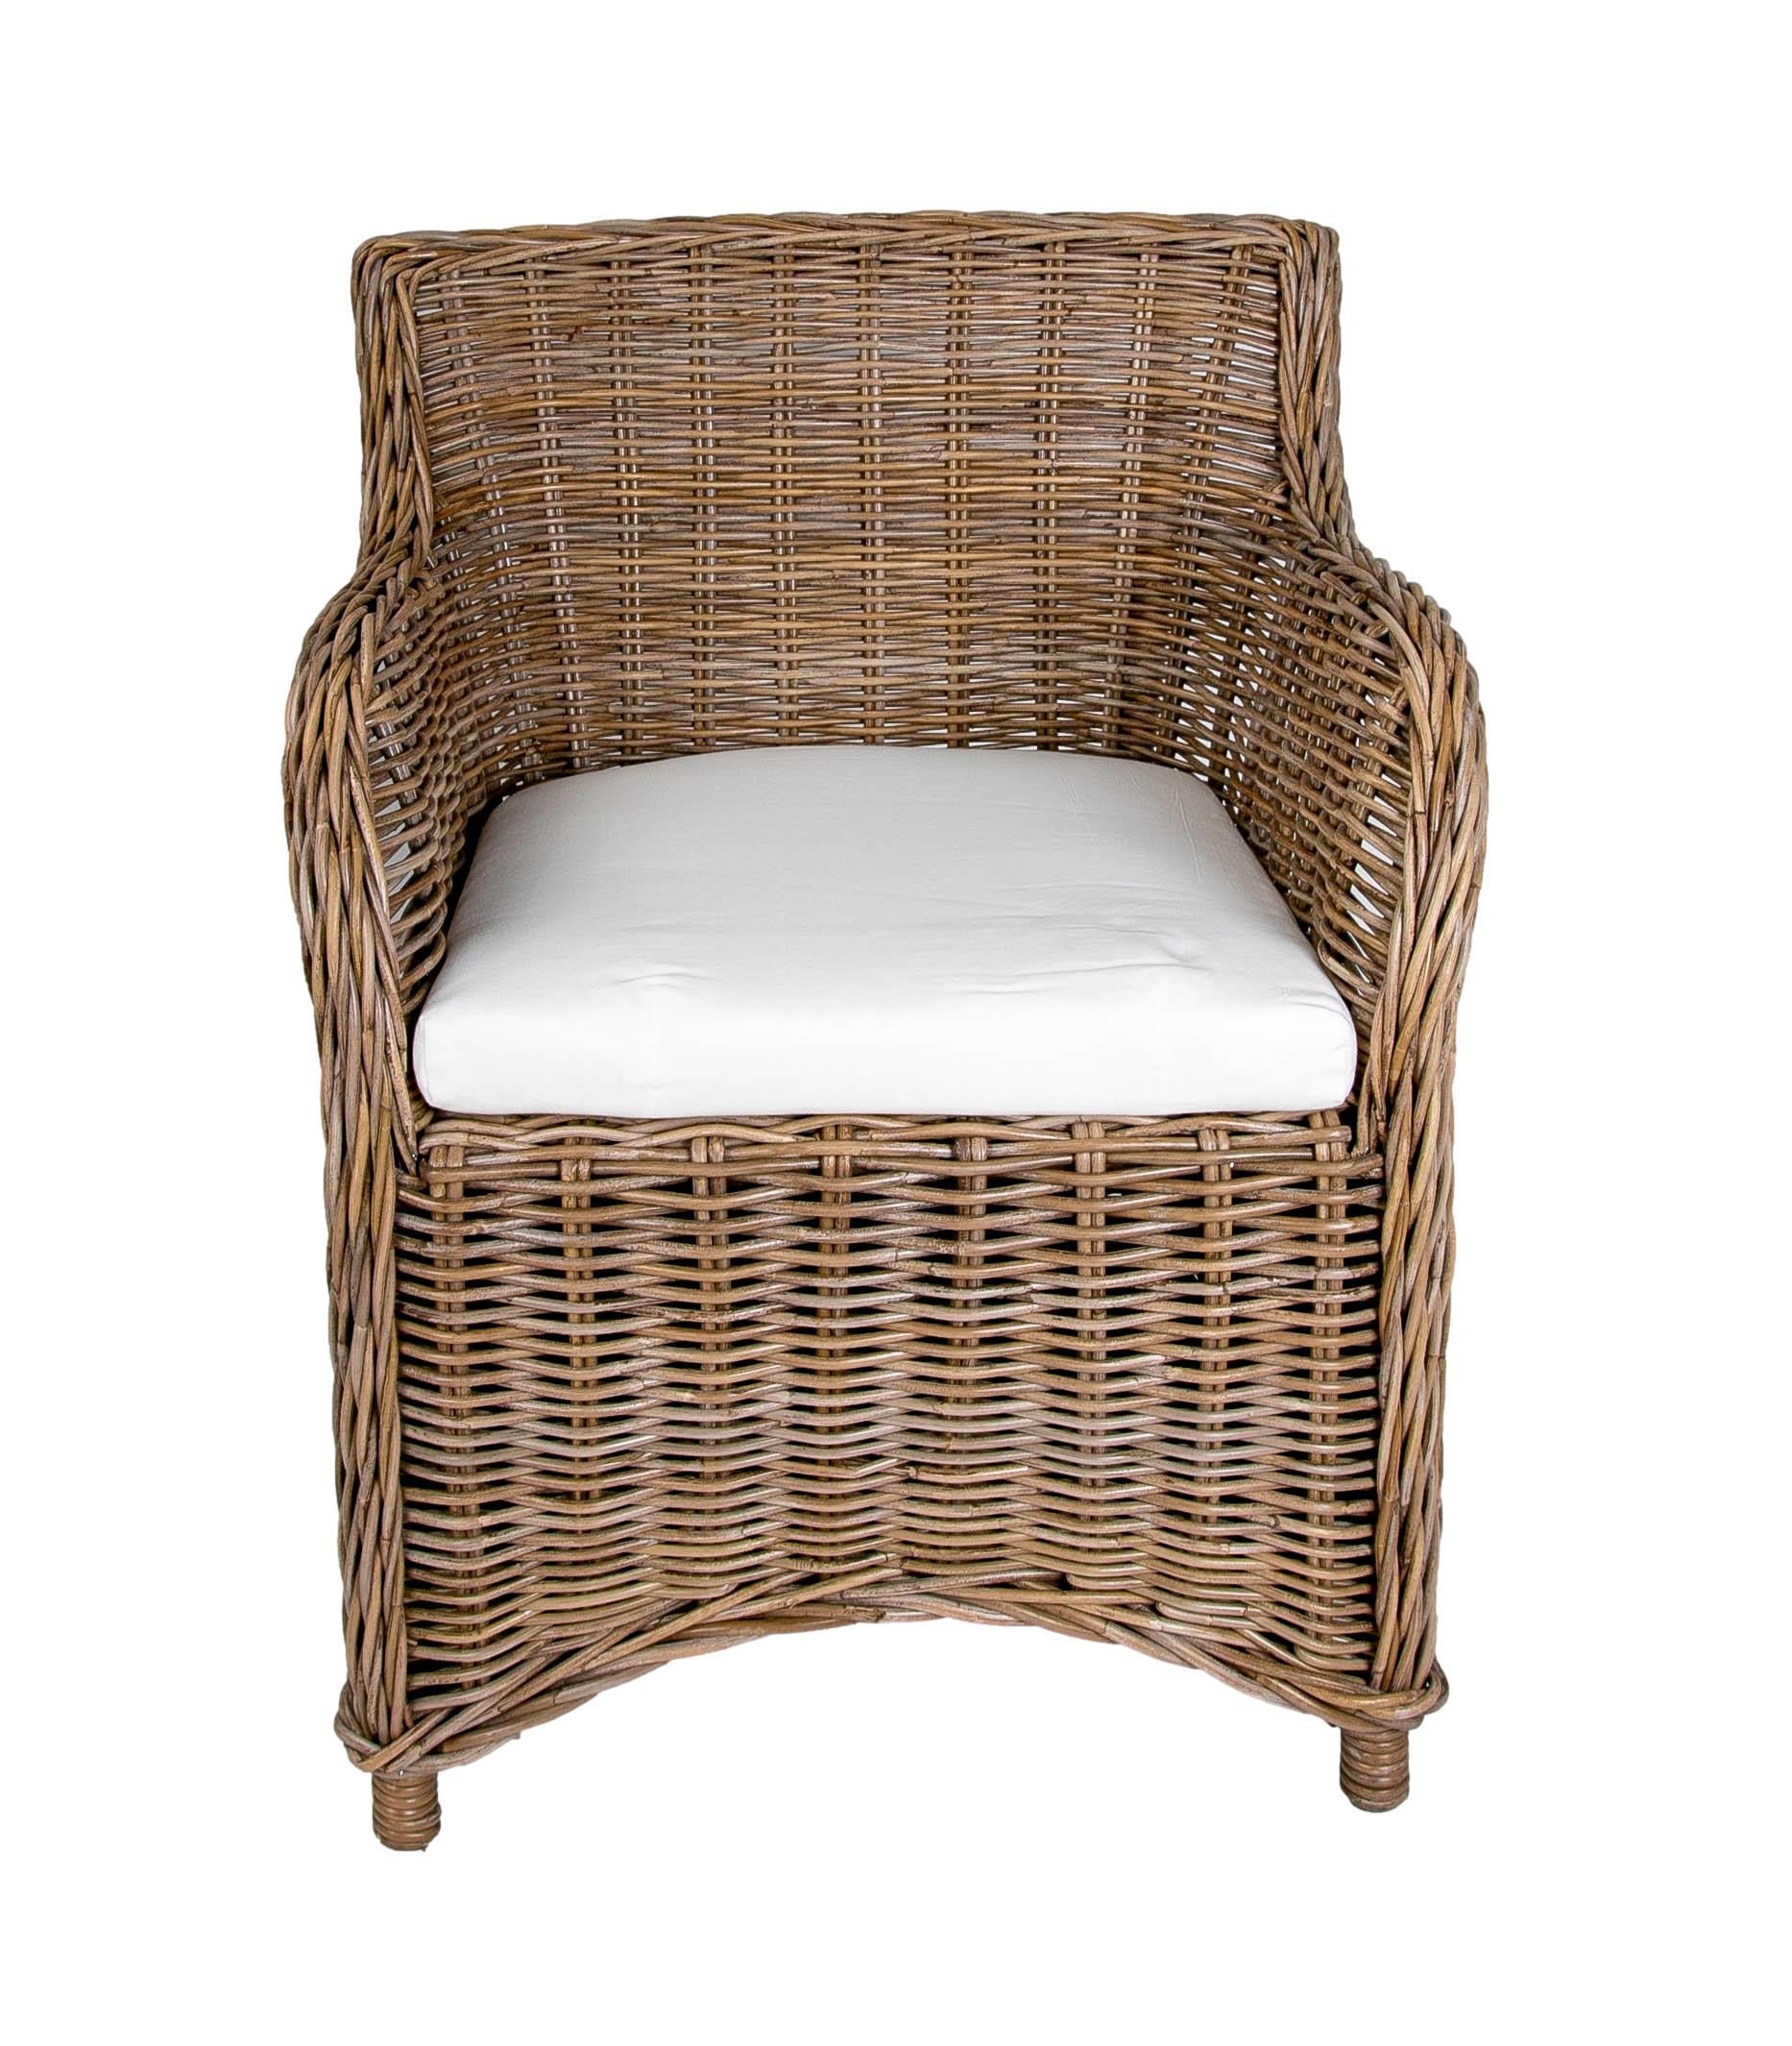  Rattan Garden Chair with Cushion in Greyish Tone For Sale 1